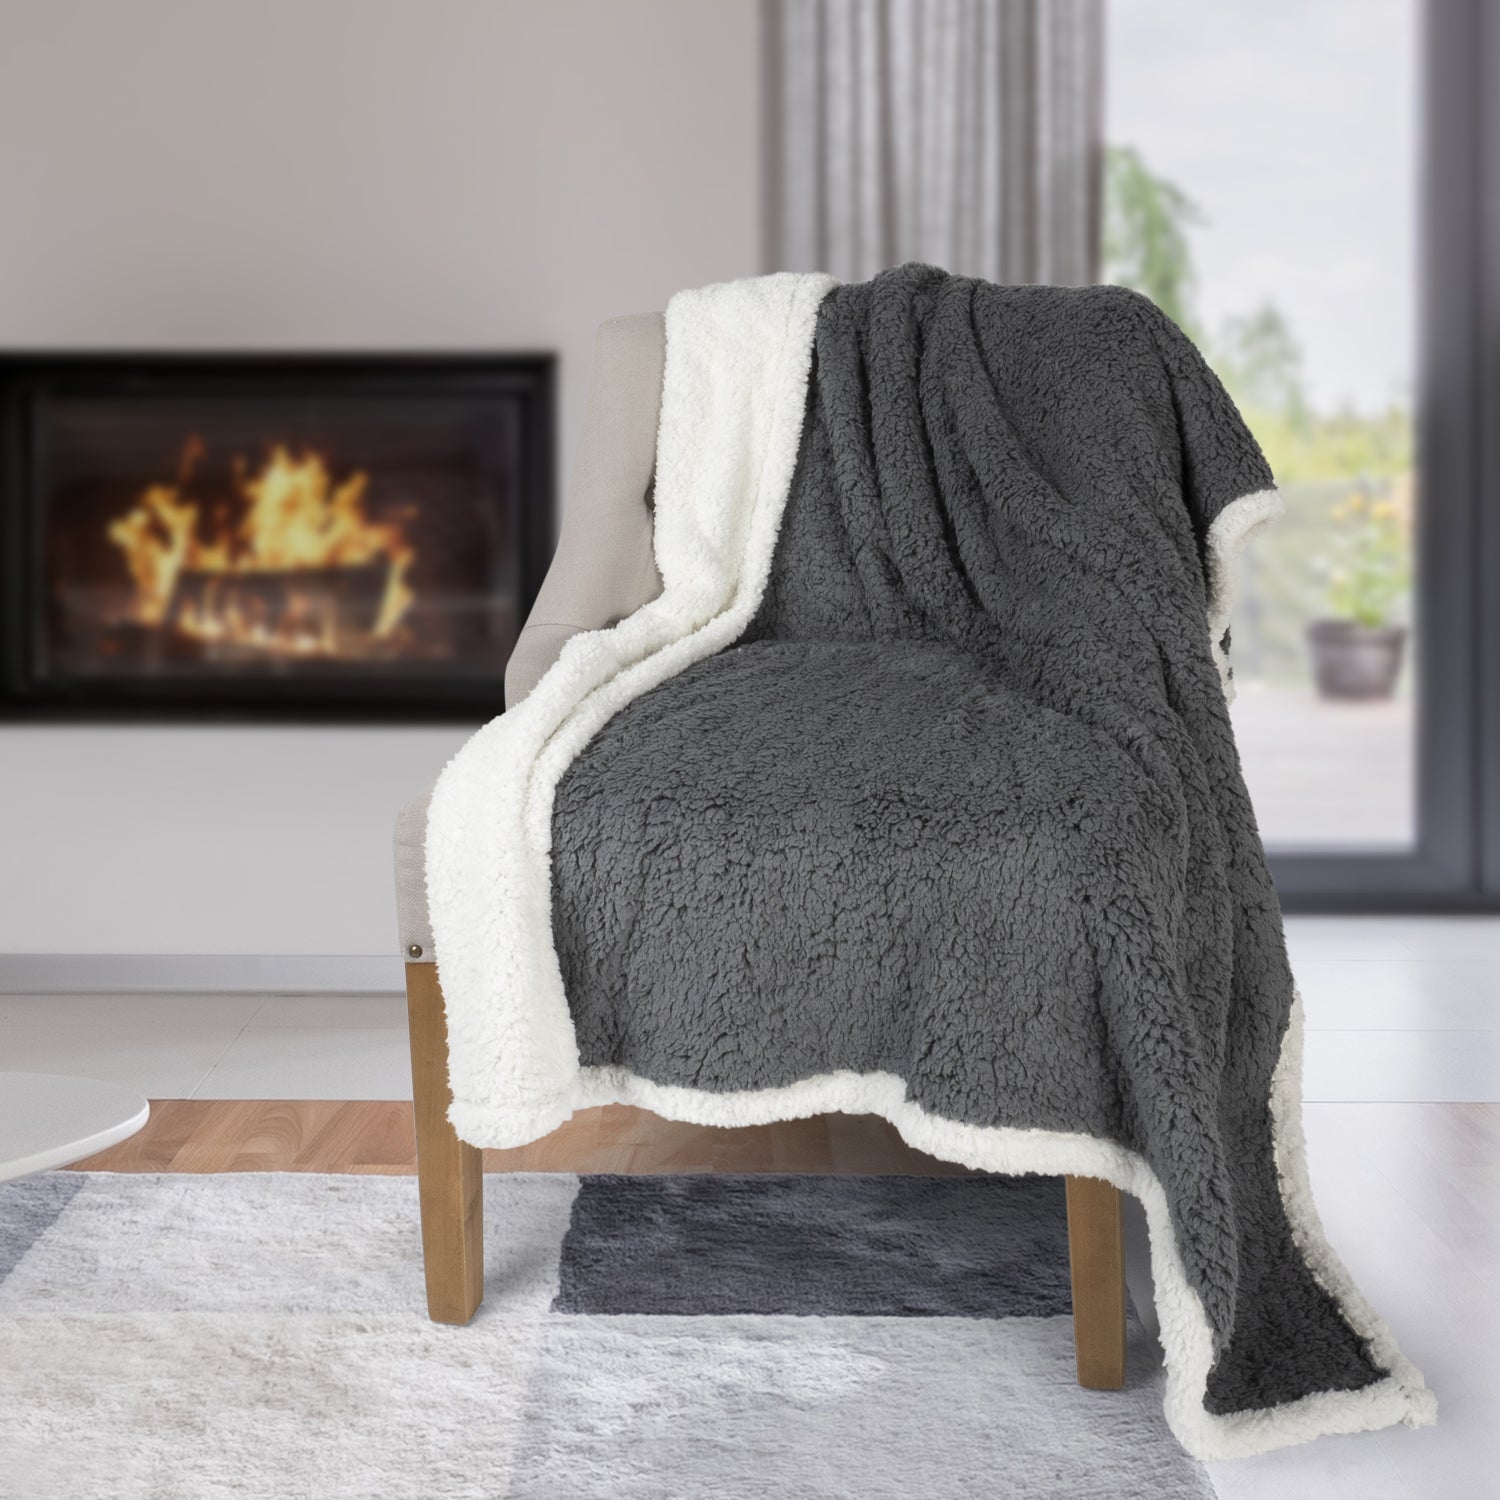 Super Soft Knit Reversible Sherpa Blanket Throw Home Decor Bedding 48X60 Charcoal - DecoElegance - Blanket Throw Home Bedding